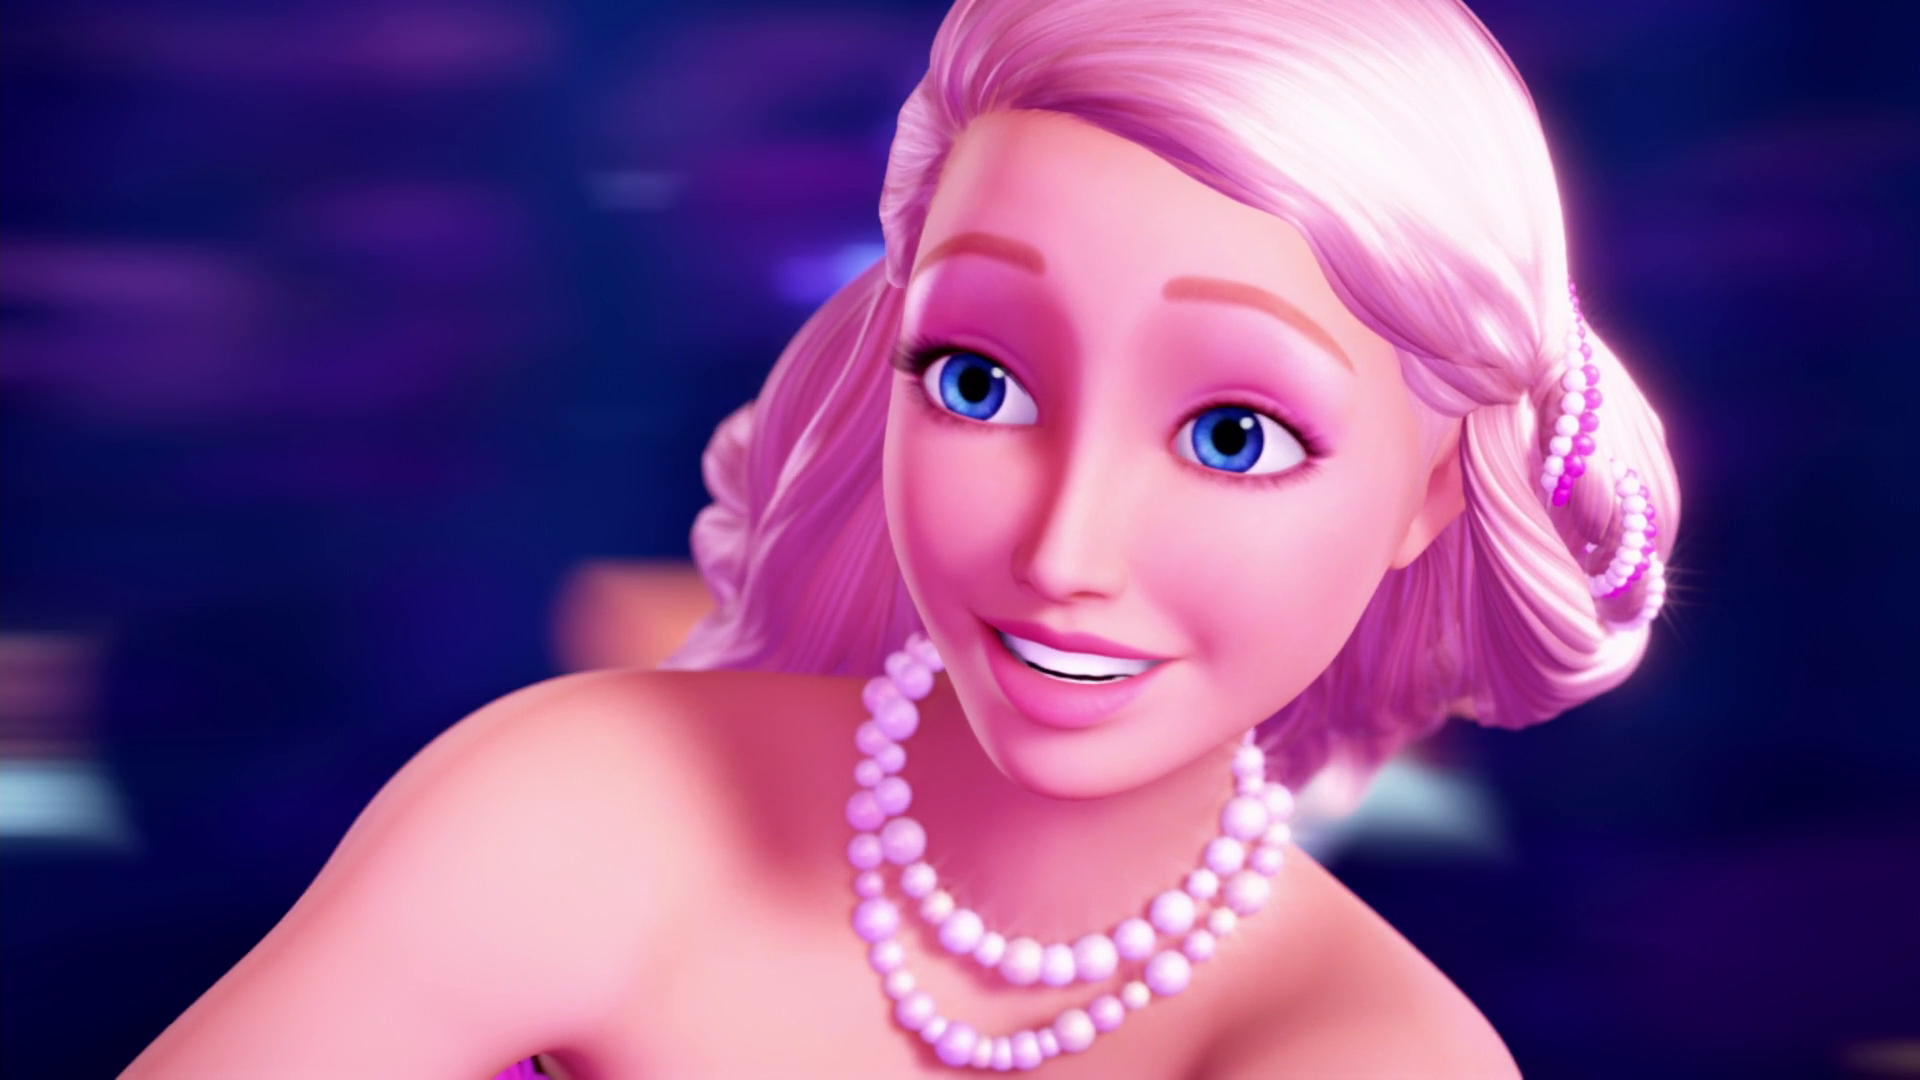 Barbie Pearl Princess Download   1024x576 Wallpaper   teahubio 1920x1080